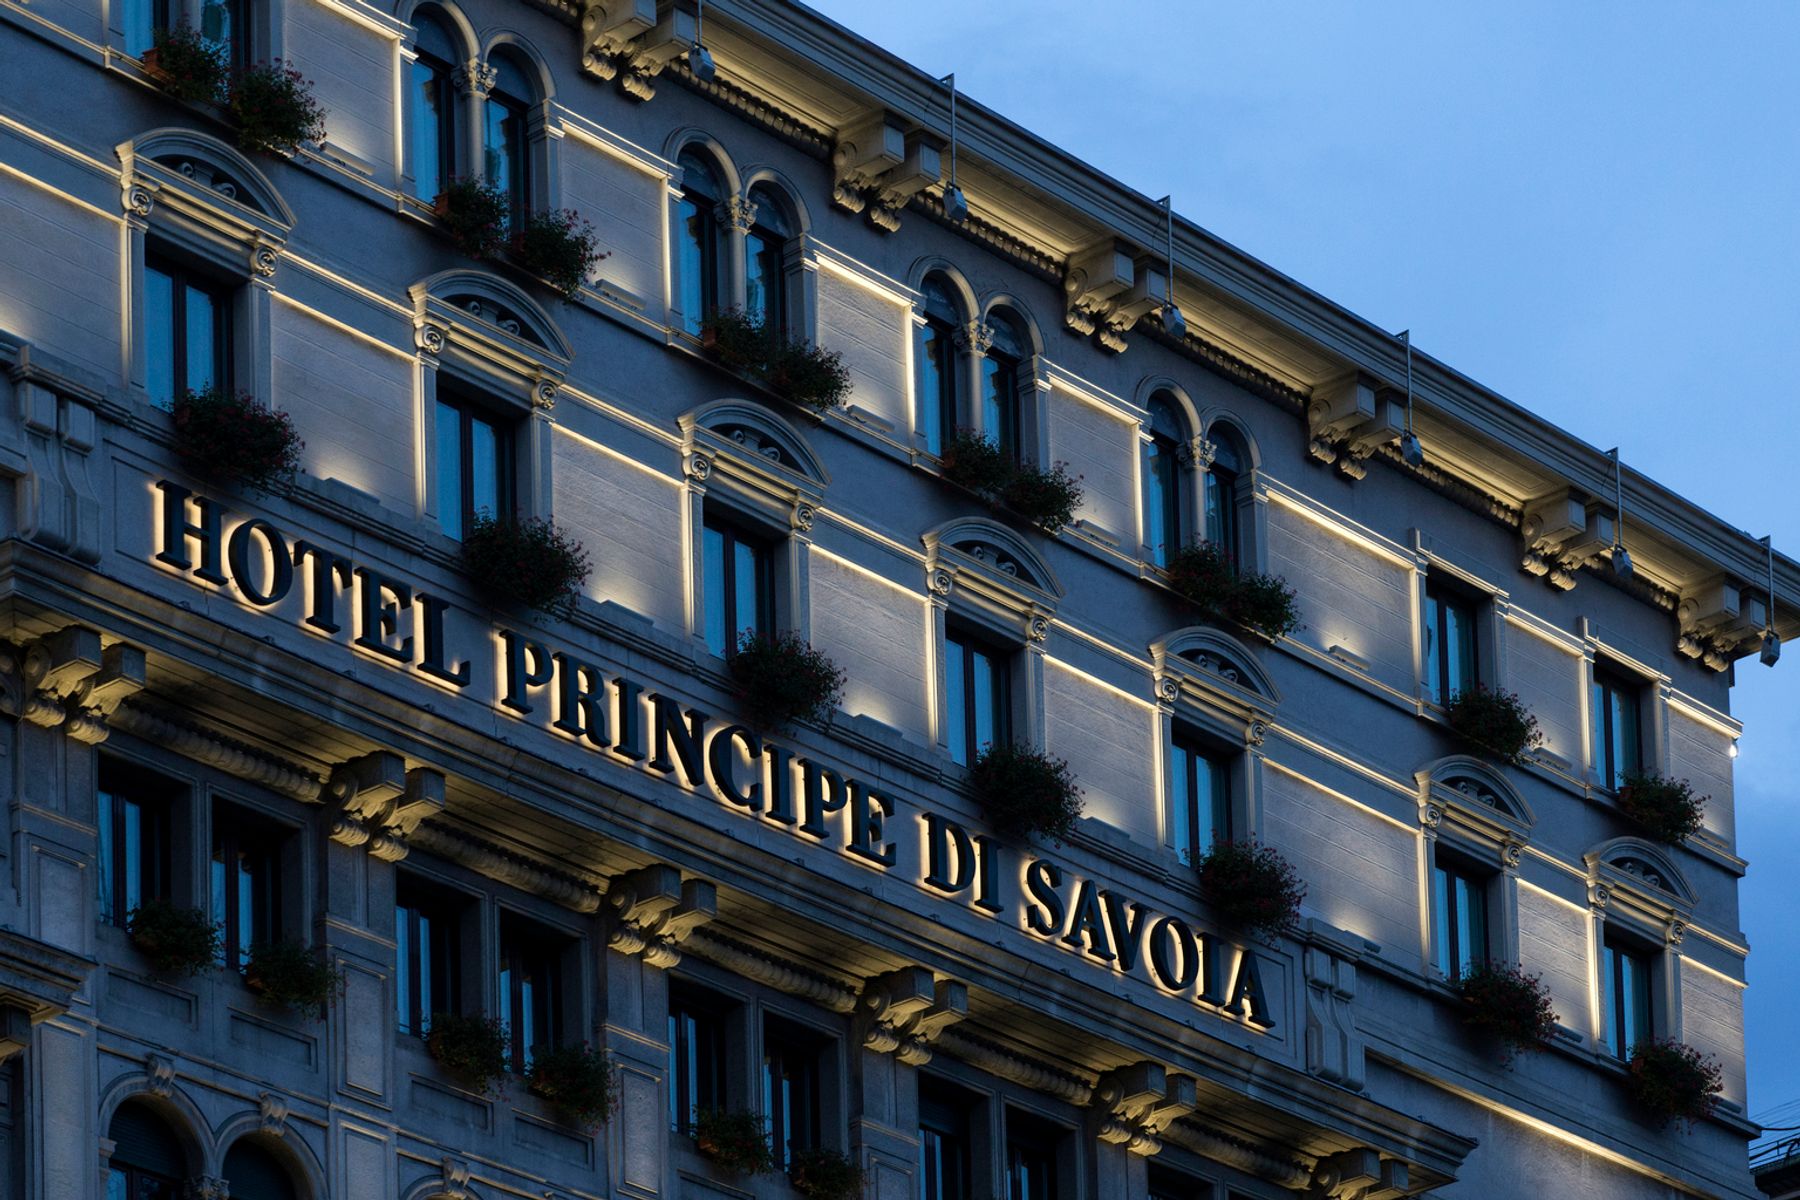 Hotel Principe di Savoia, Milan. Architecture : Cesare Tenca. Conception lumière : Marco Nereo Rotelli, Milan. Photographie : Dirk Vogel, Altena.